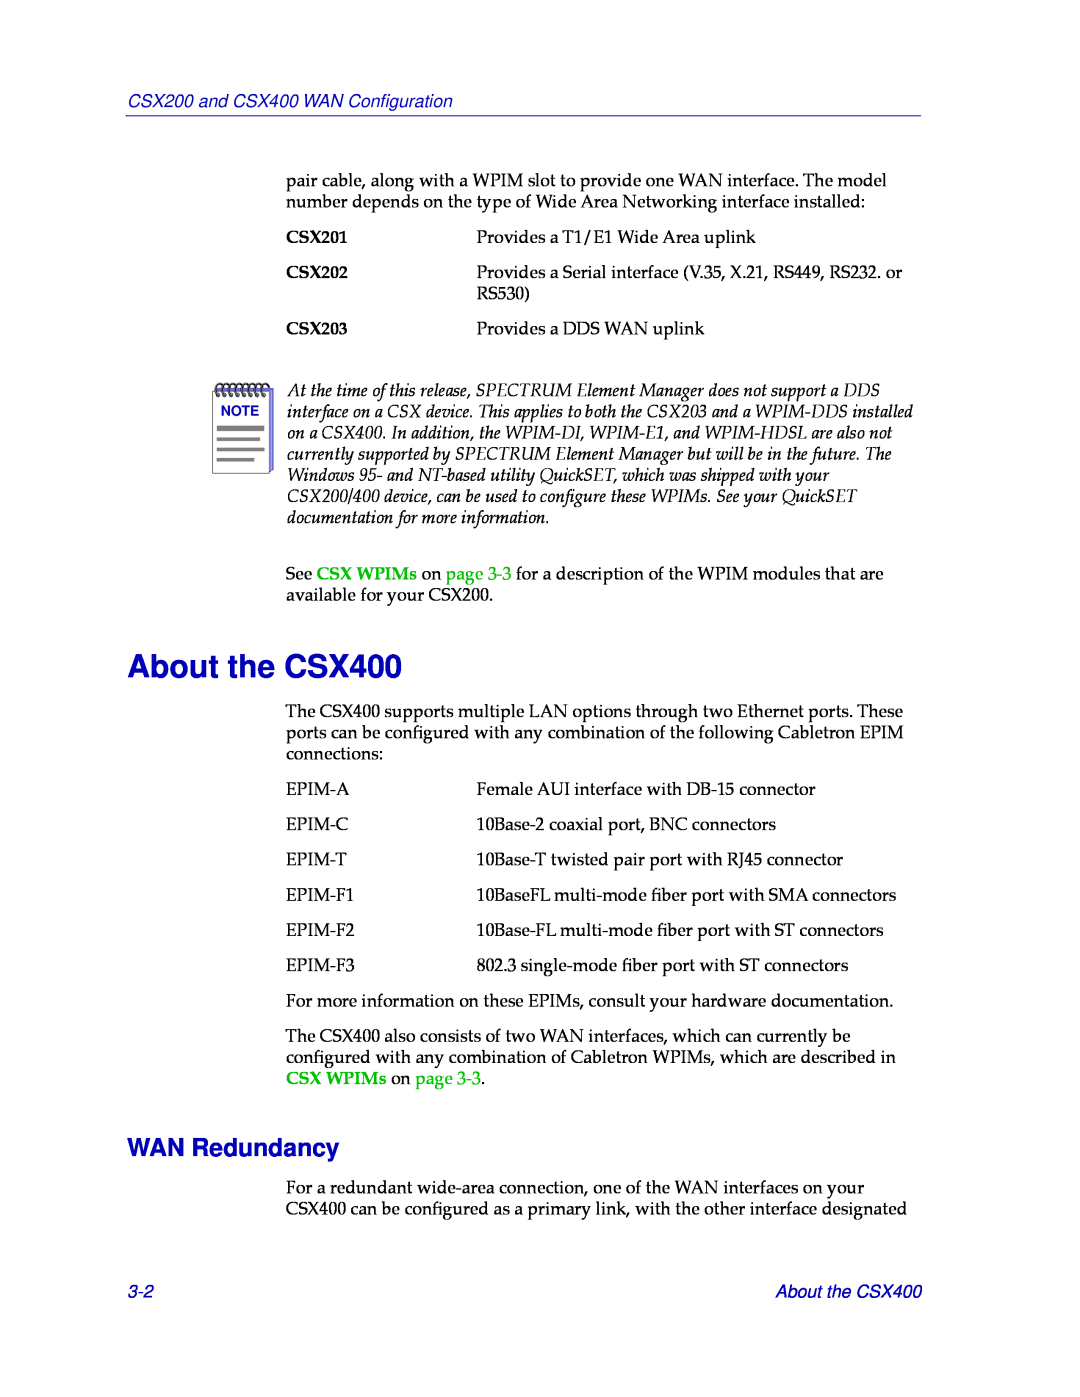 Cabletron Systems manual About the CSX400, WAN Redundancy, CSX200 and CSX400 WAN Conﬁguration 